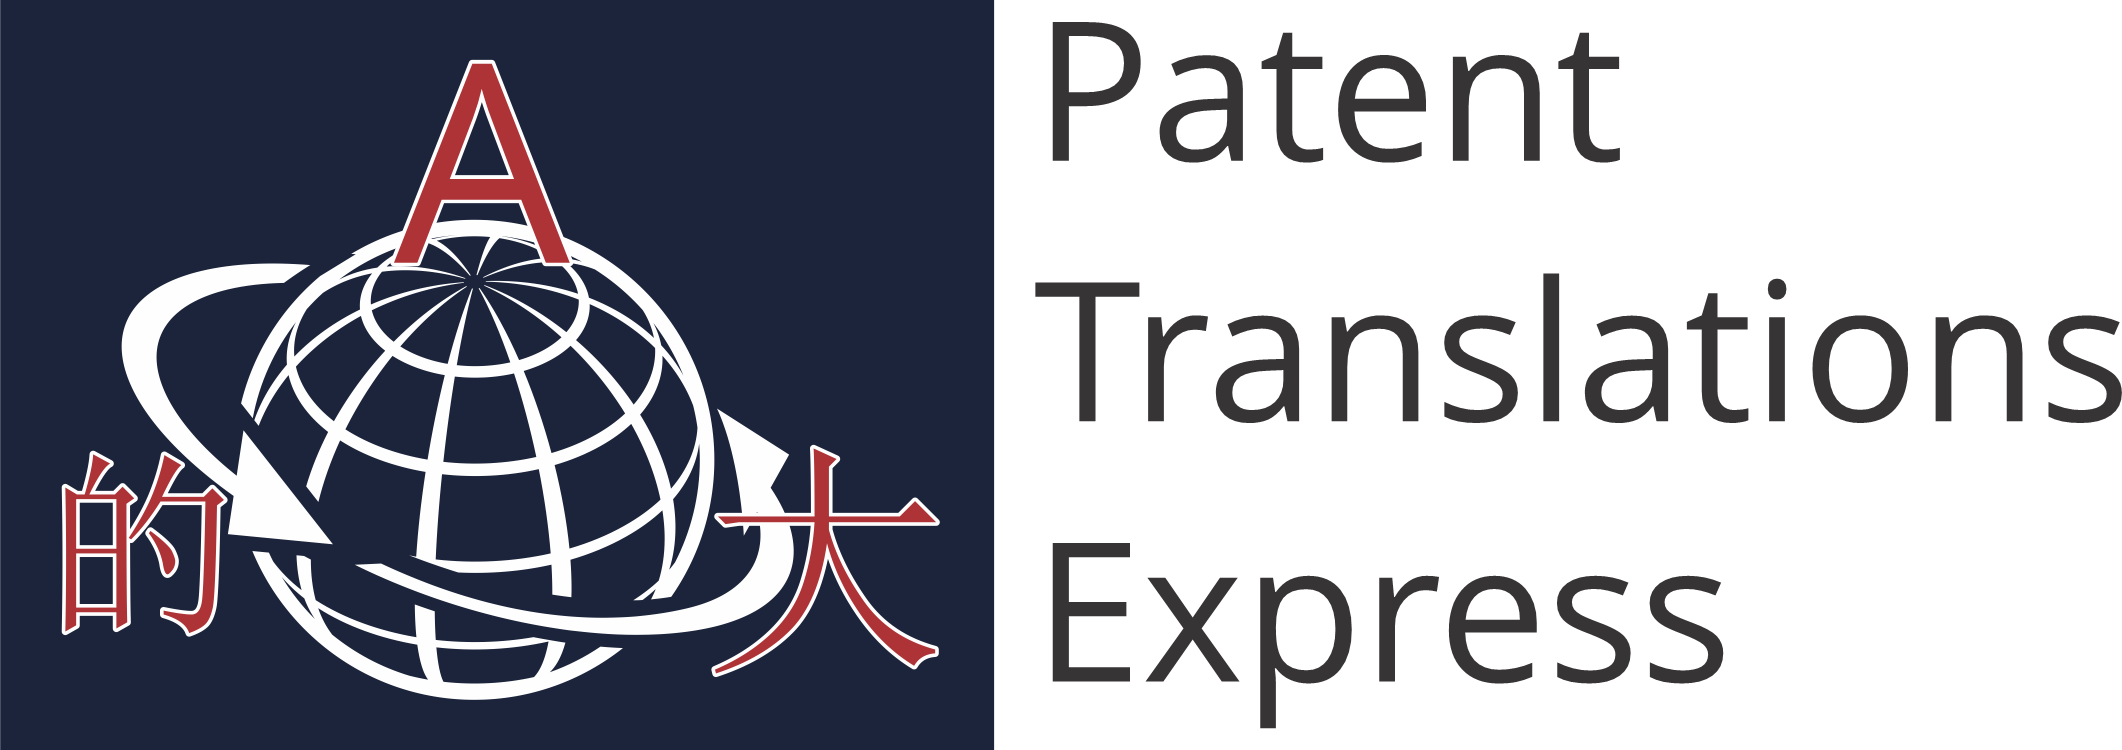 Patent Translation Express